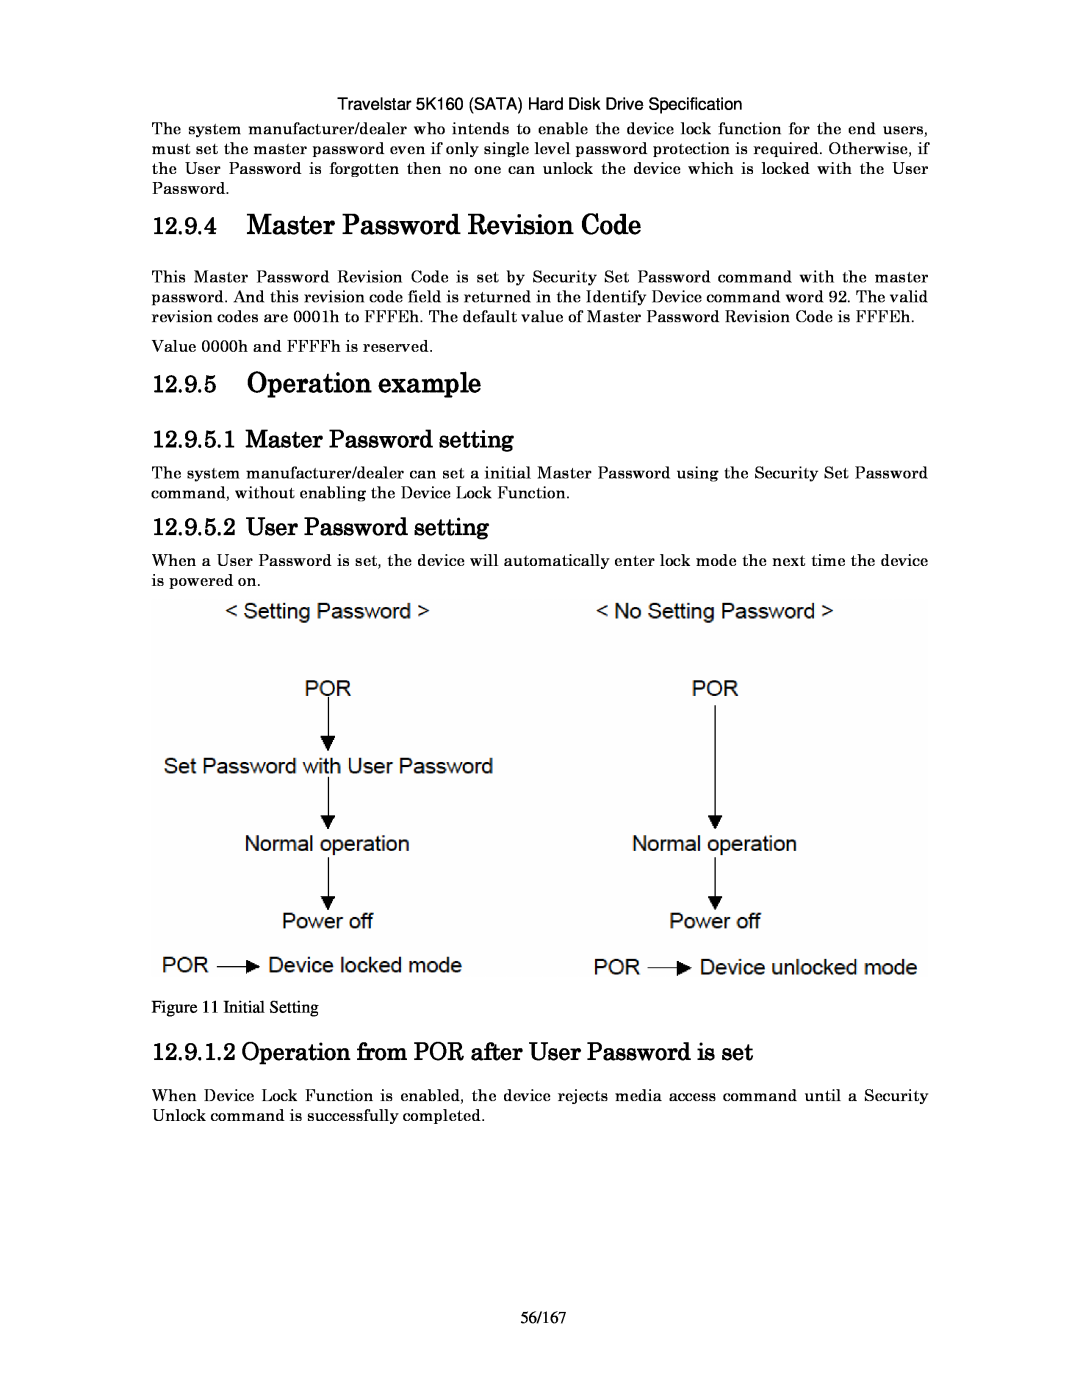 Hitachi HTS541680J9SA00 Master Password Revision Code, Operation example, Master Password setting, User Password setting 